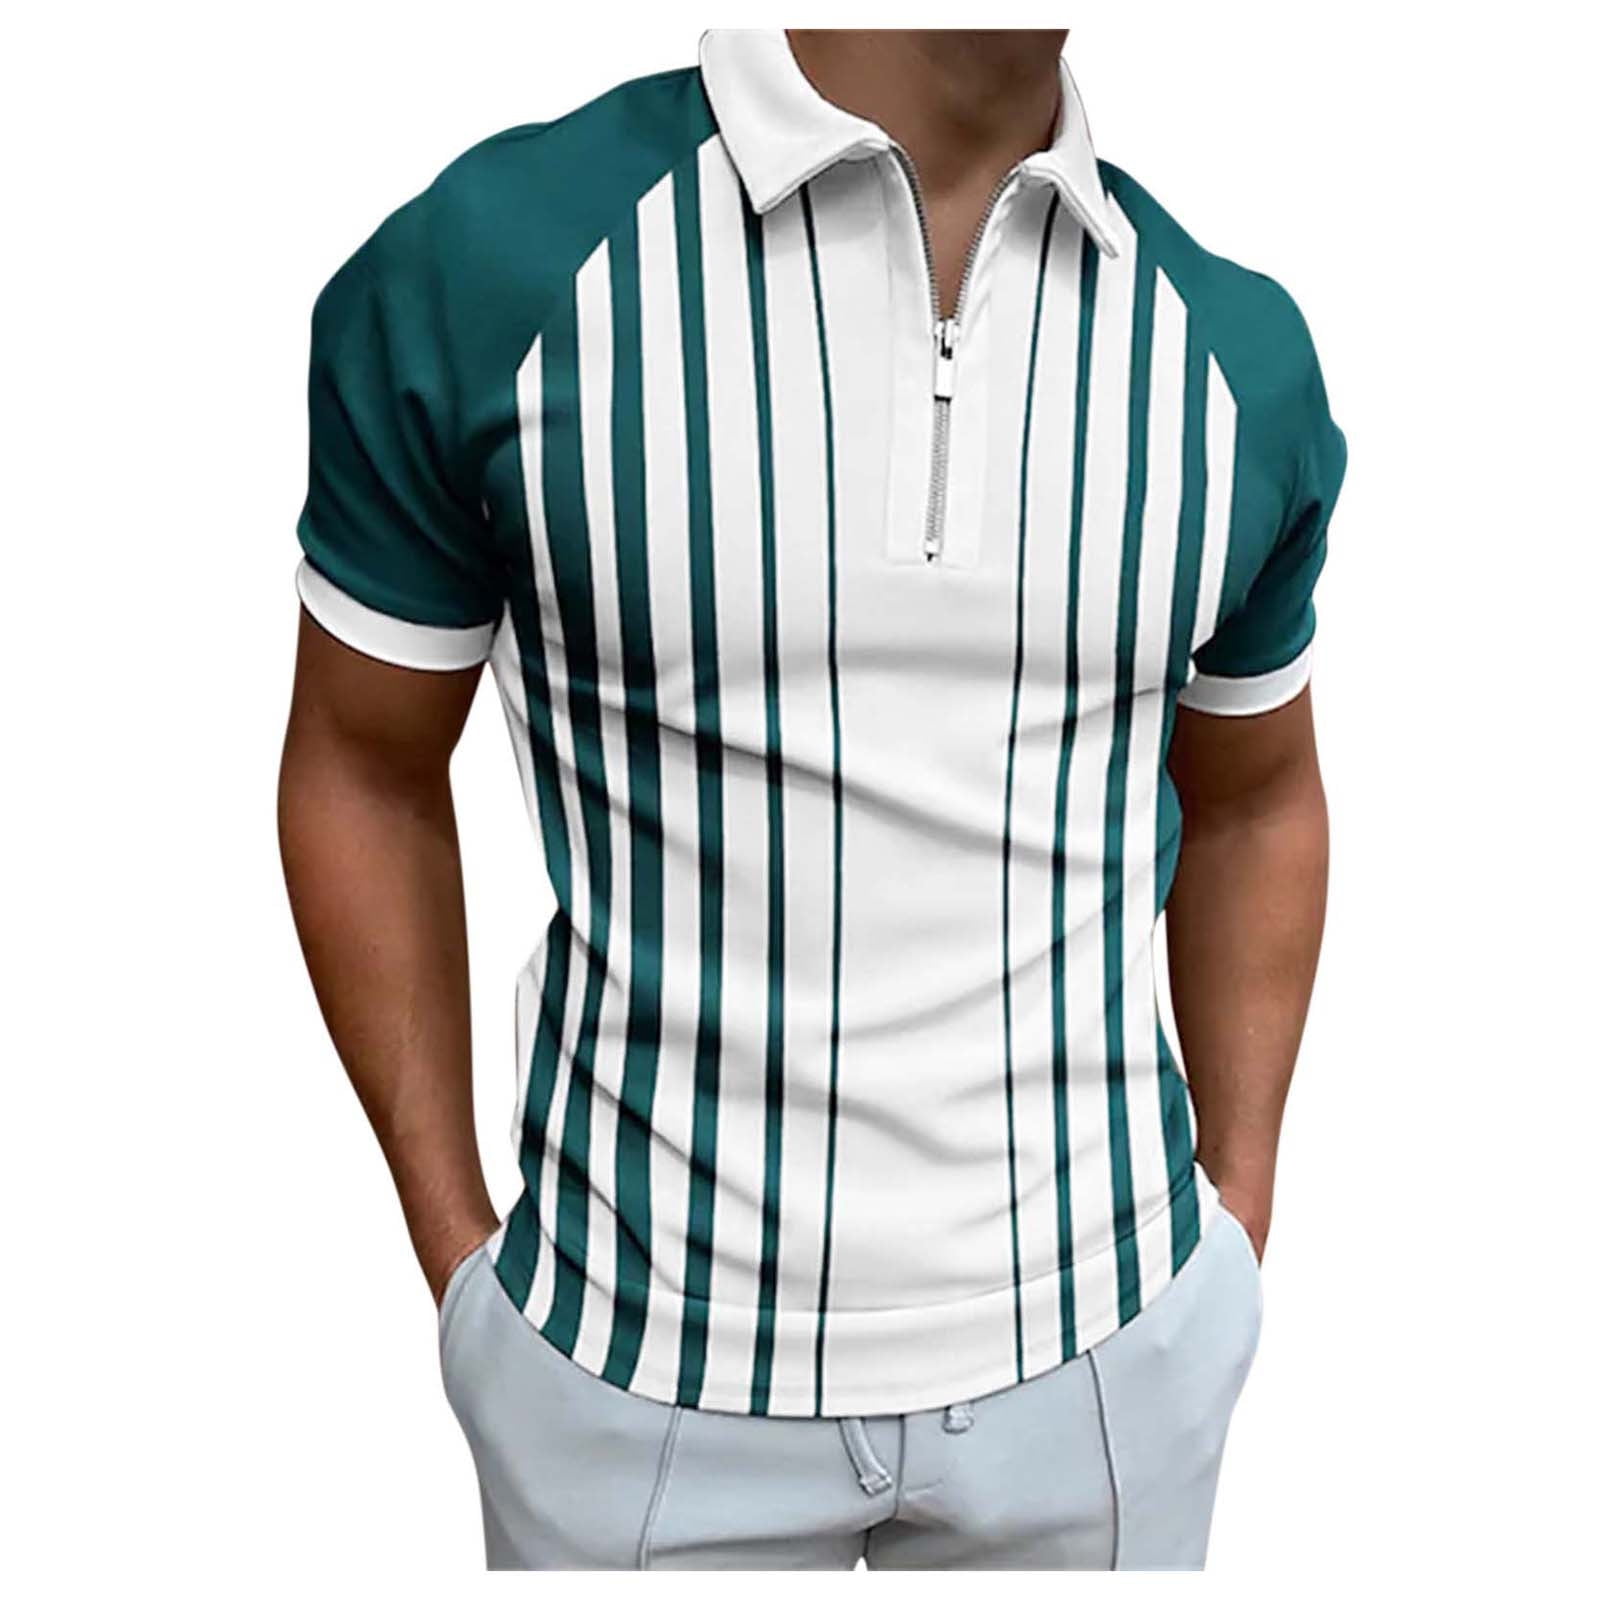 HCNTES Golf Polo Shirts for Men Casual Moisture Wicking Men's Polo ...